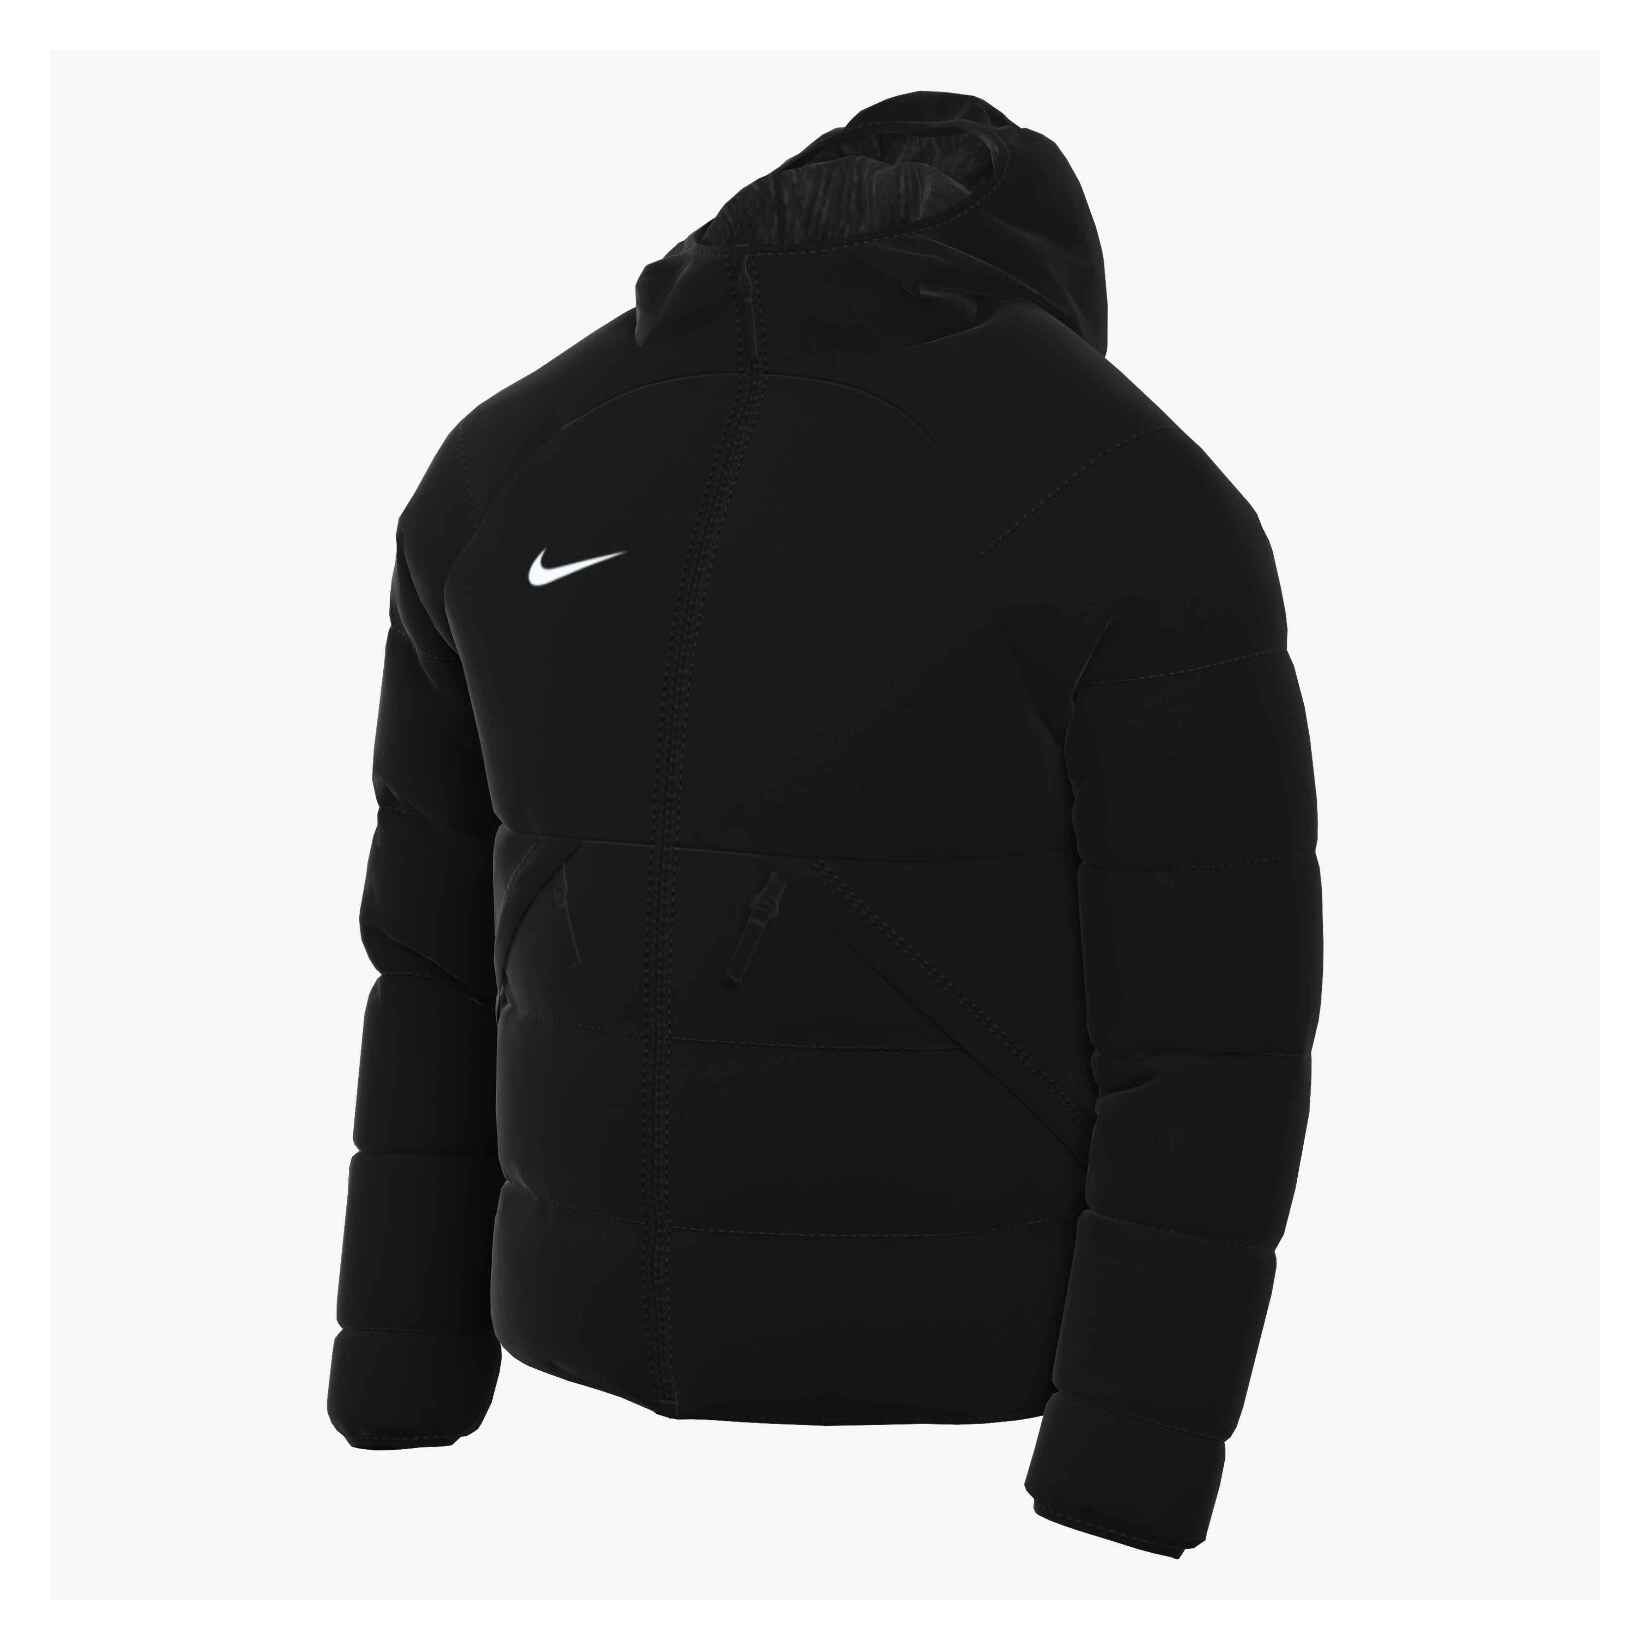 Nike Academy Pro Fall Jacket - Kitlocker.com